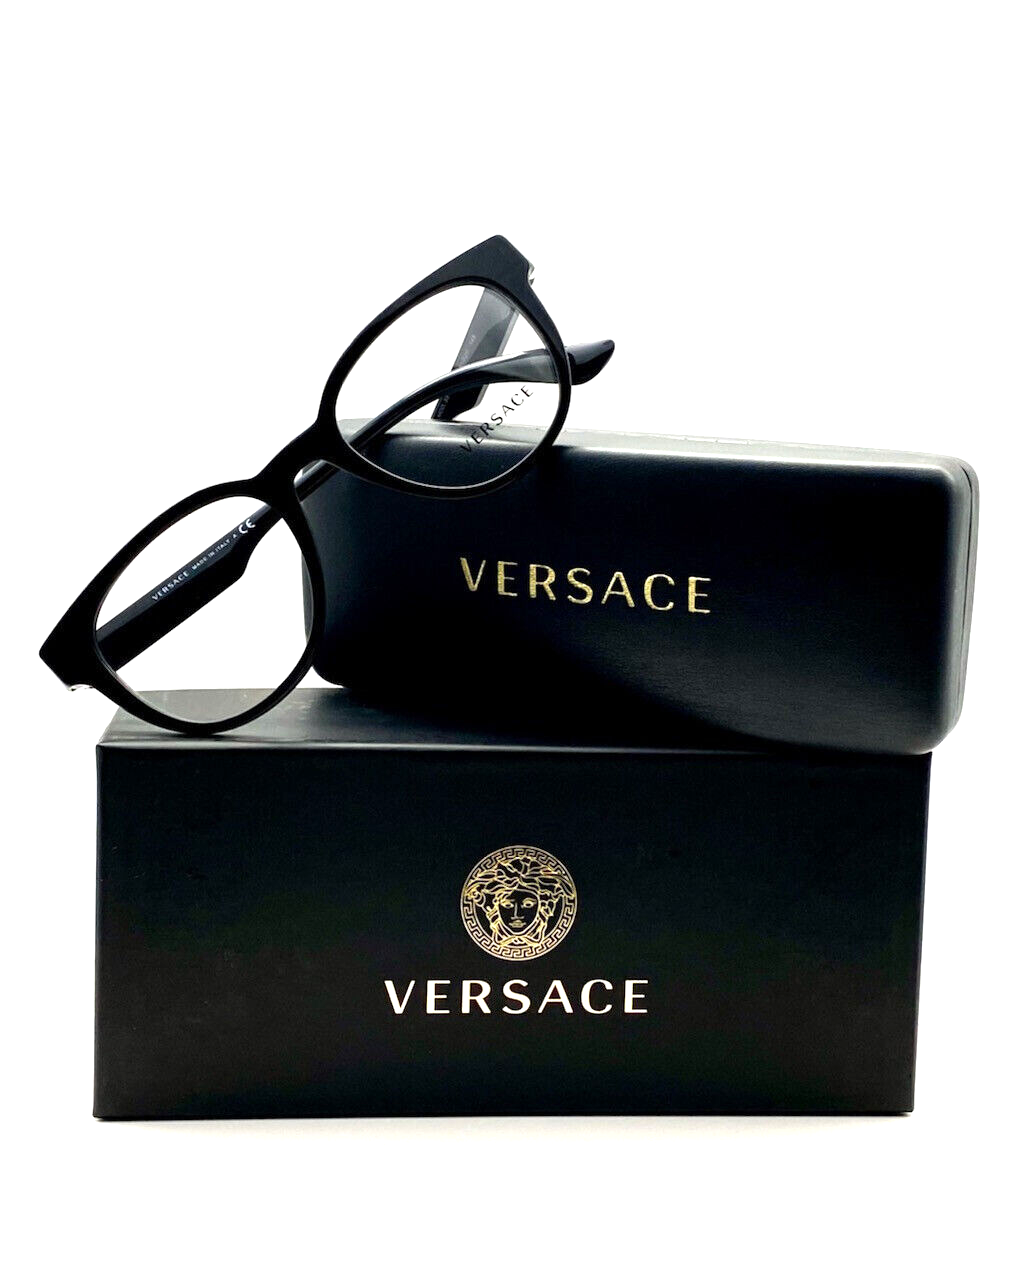 Versace VE3317 GB1 Black Full-Rim Round Men's Eyeglasses